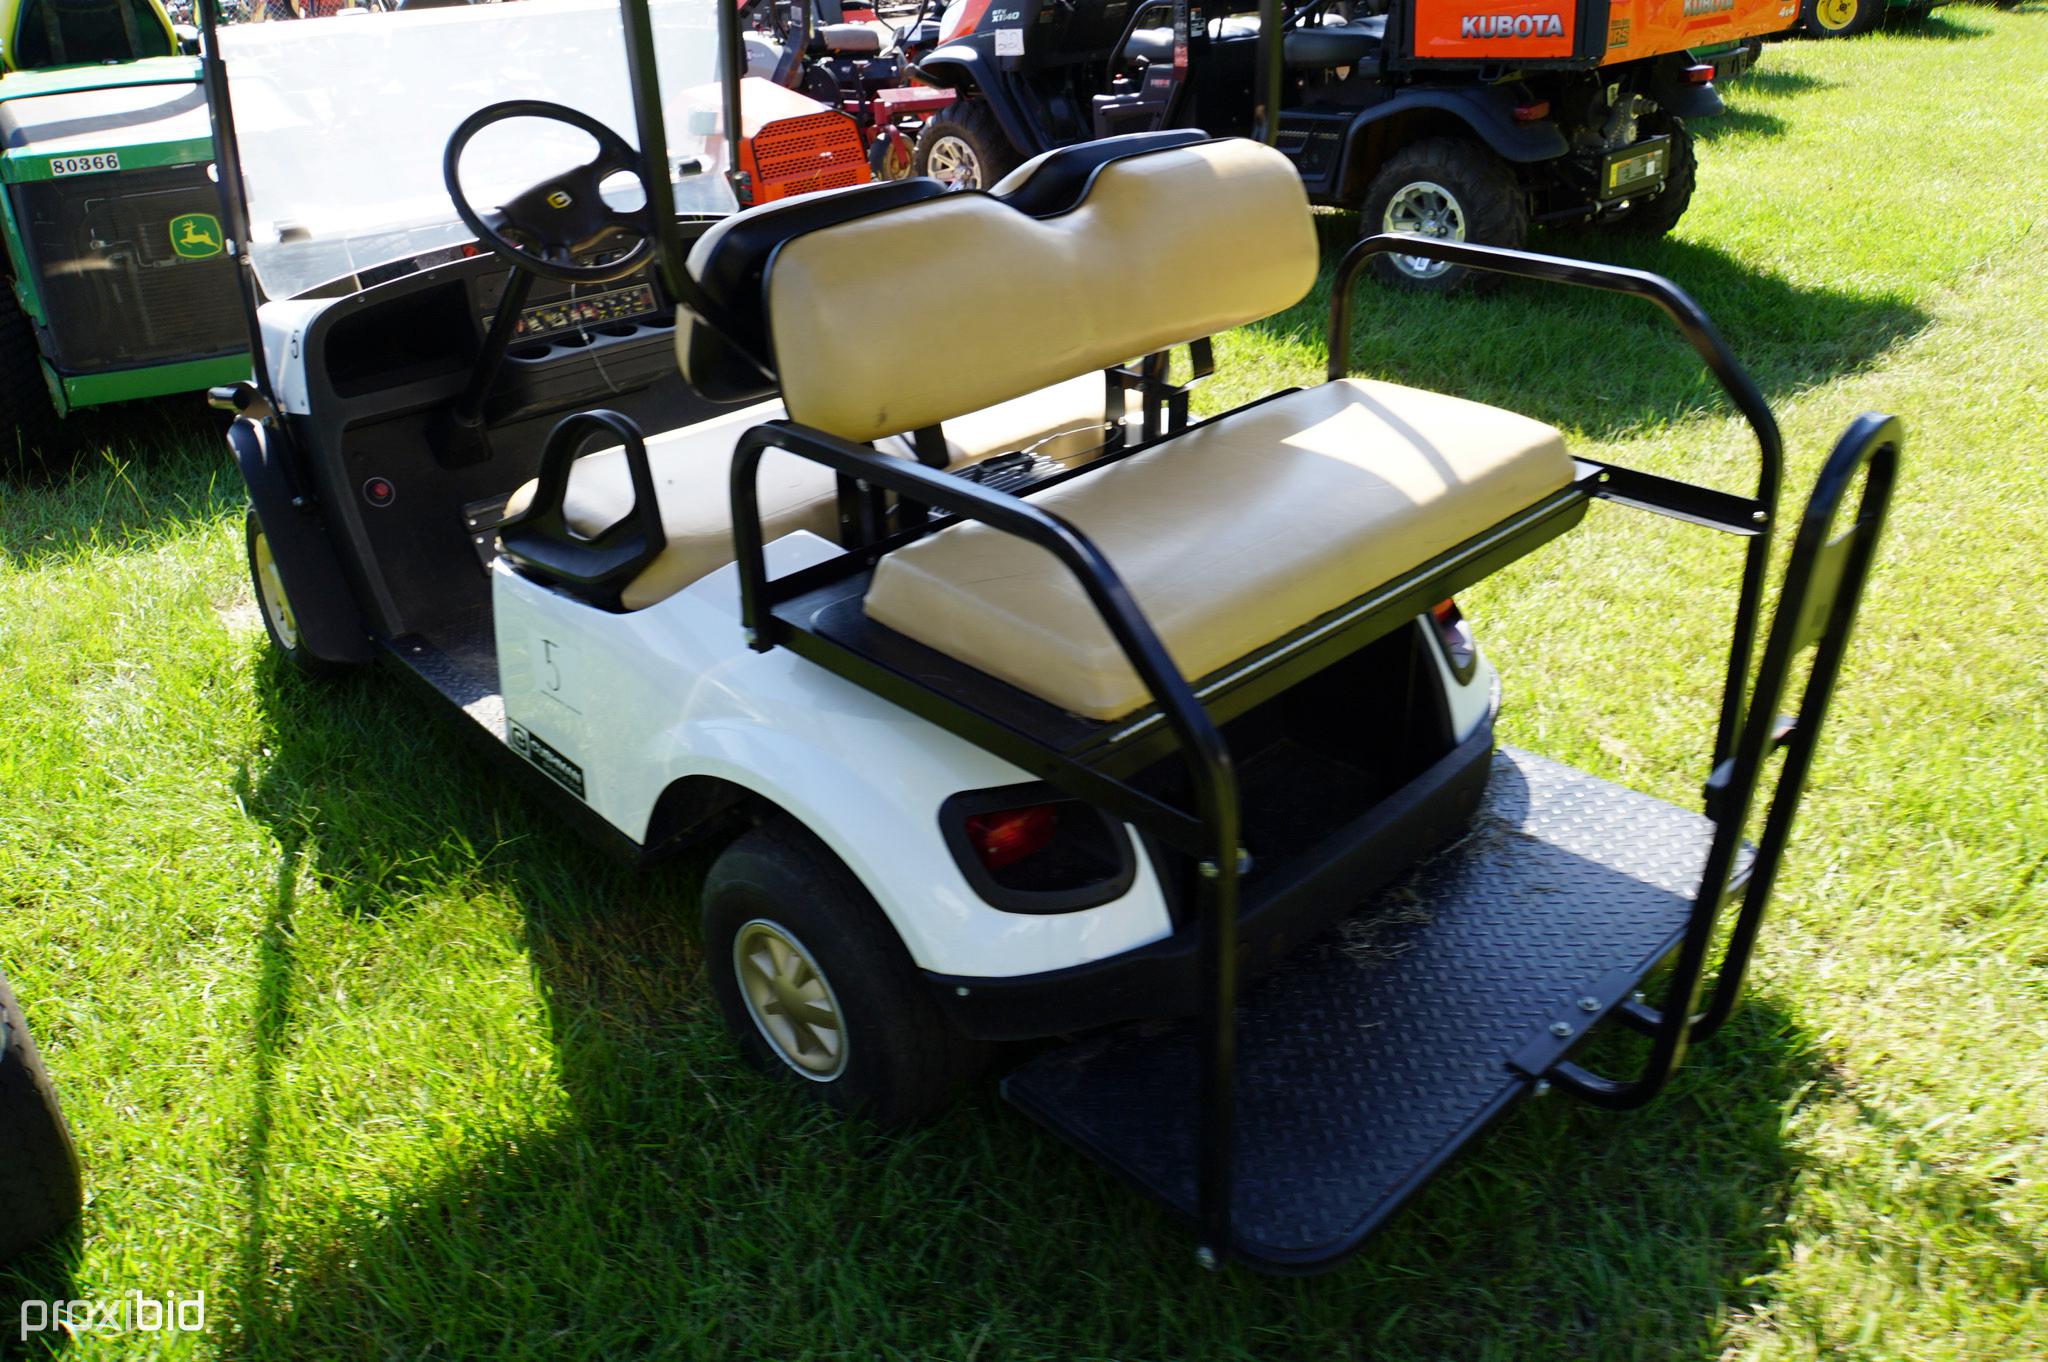 2018 Cushman Shuttle 2x2 Golf Cart, s/n 3334225 (No Title): 48-volt, Charge